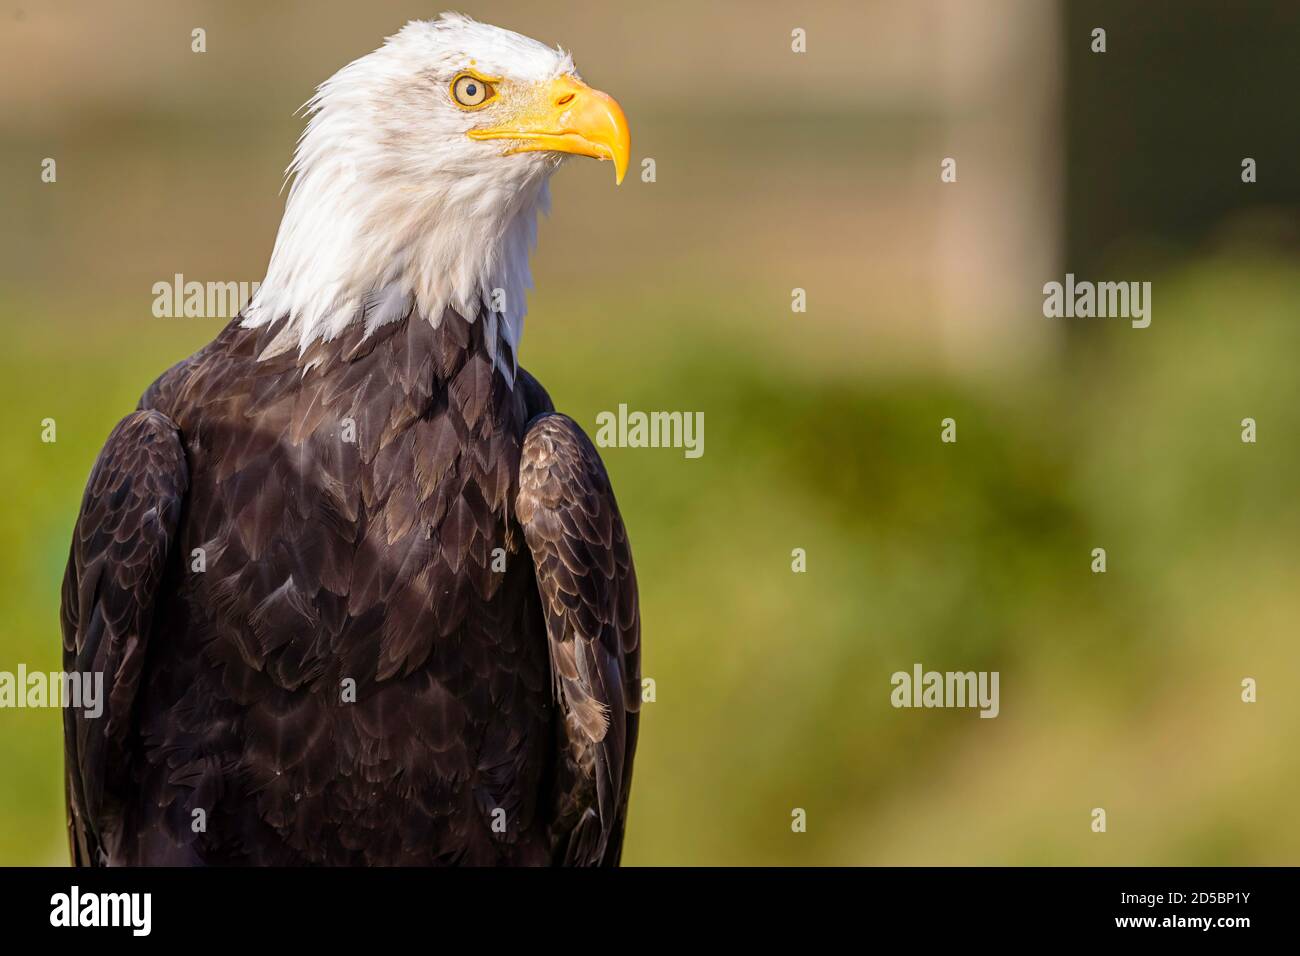 The bald eagle (Haliaeetus leucocephalus) is a bird of prey found in North America. Stock Photo